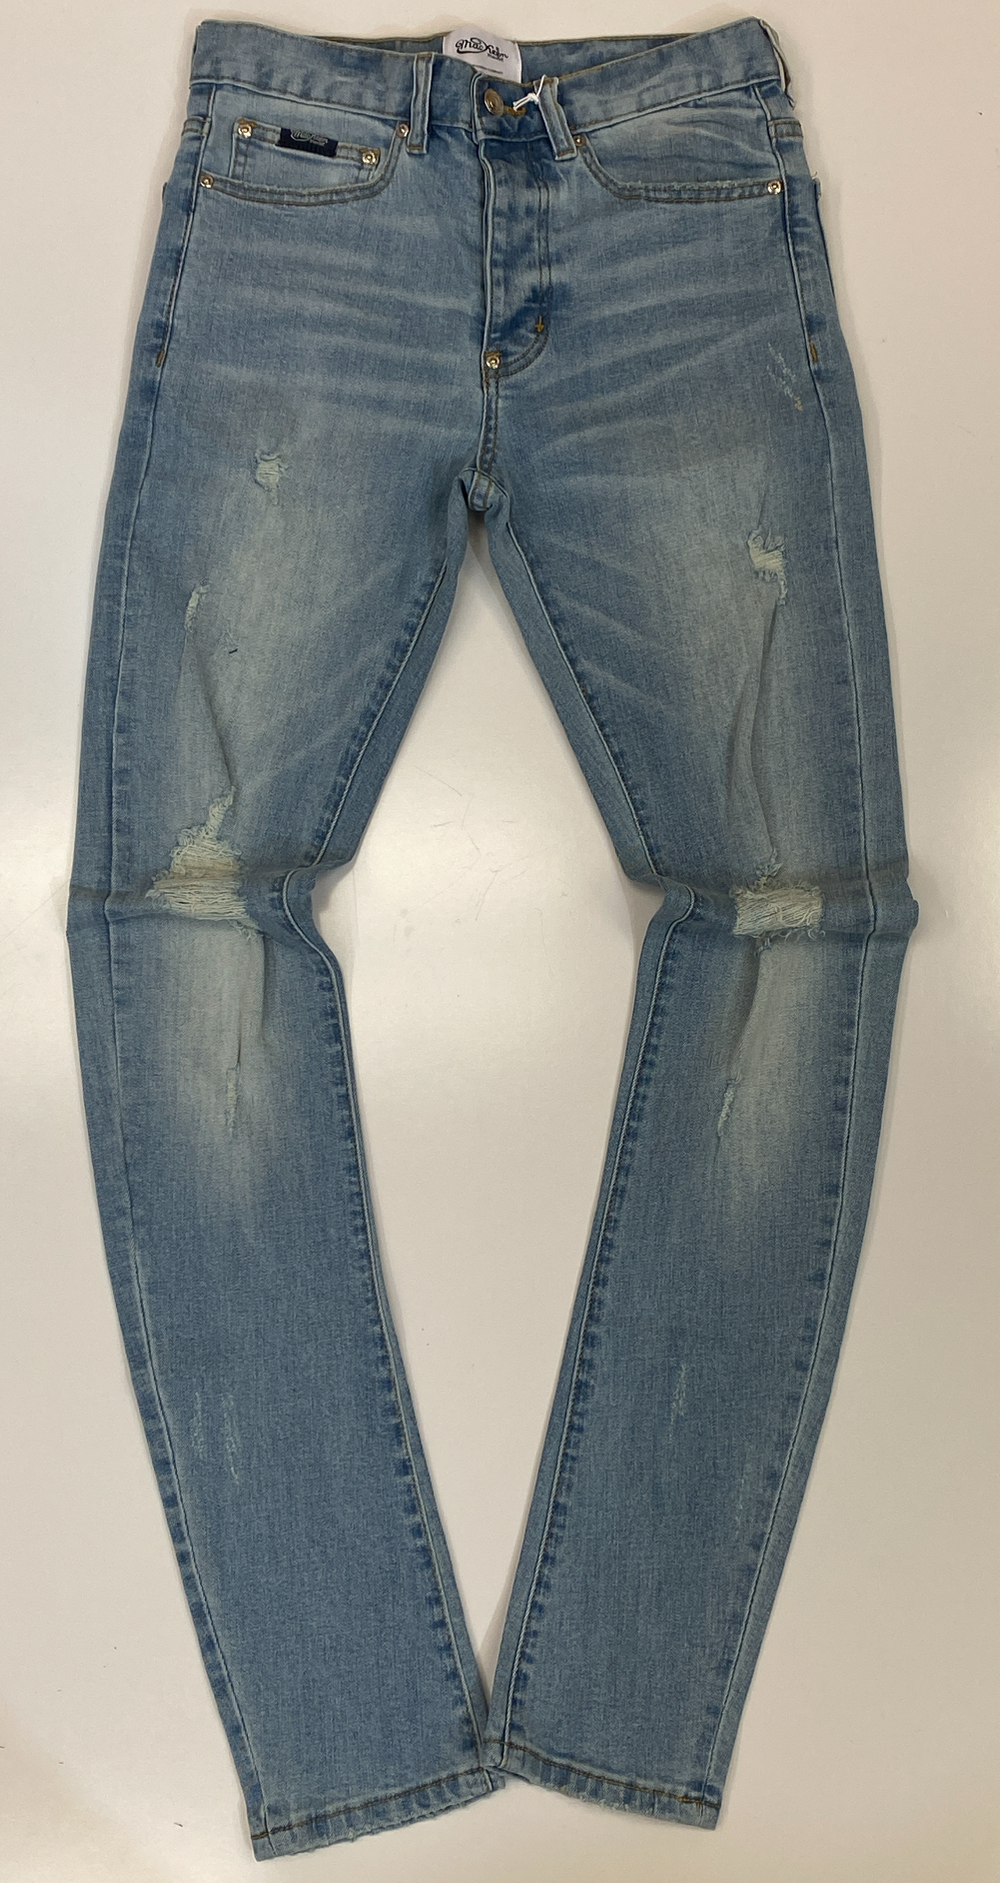 Mackeen- ron jeans (light)